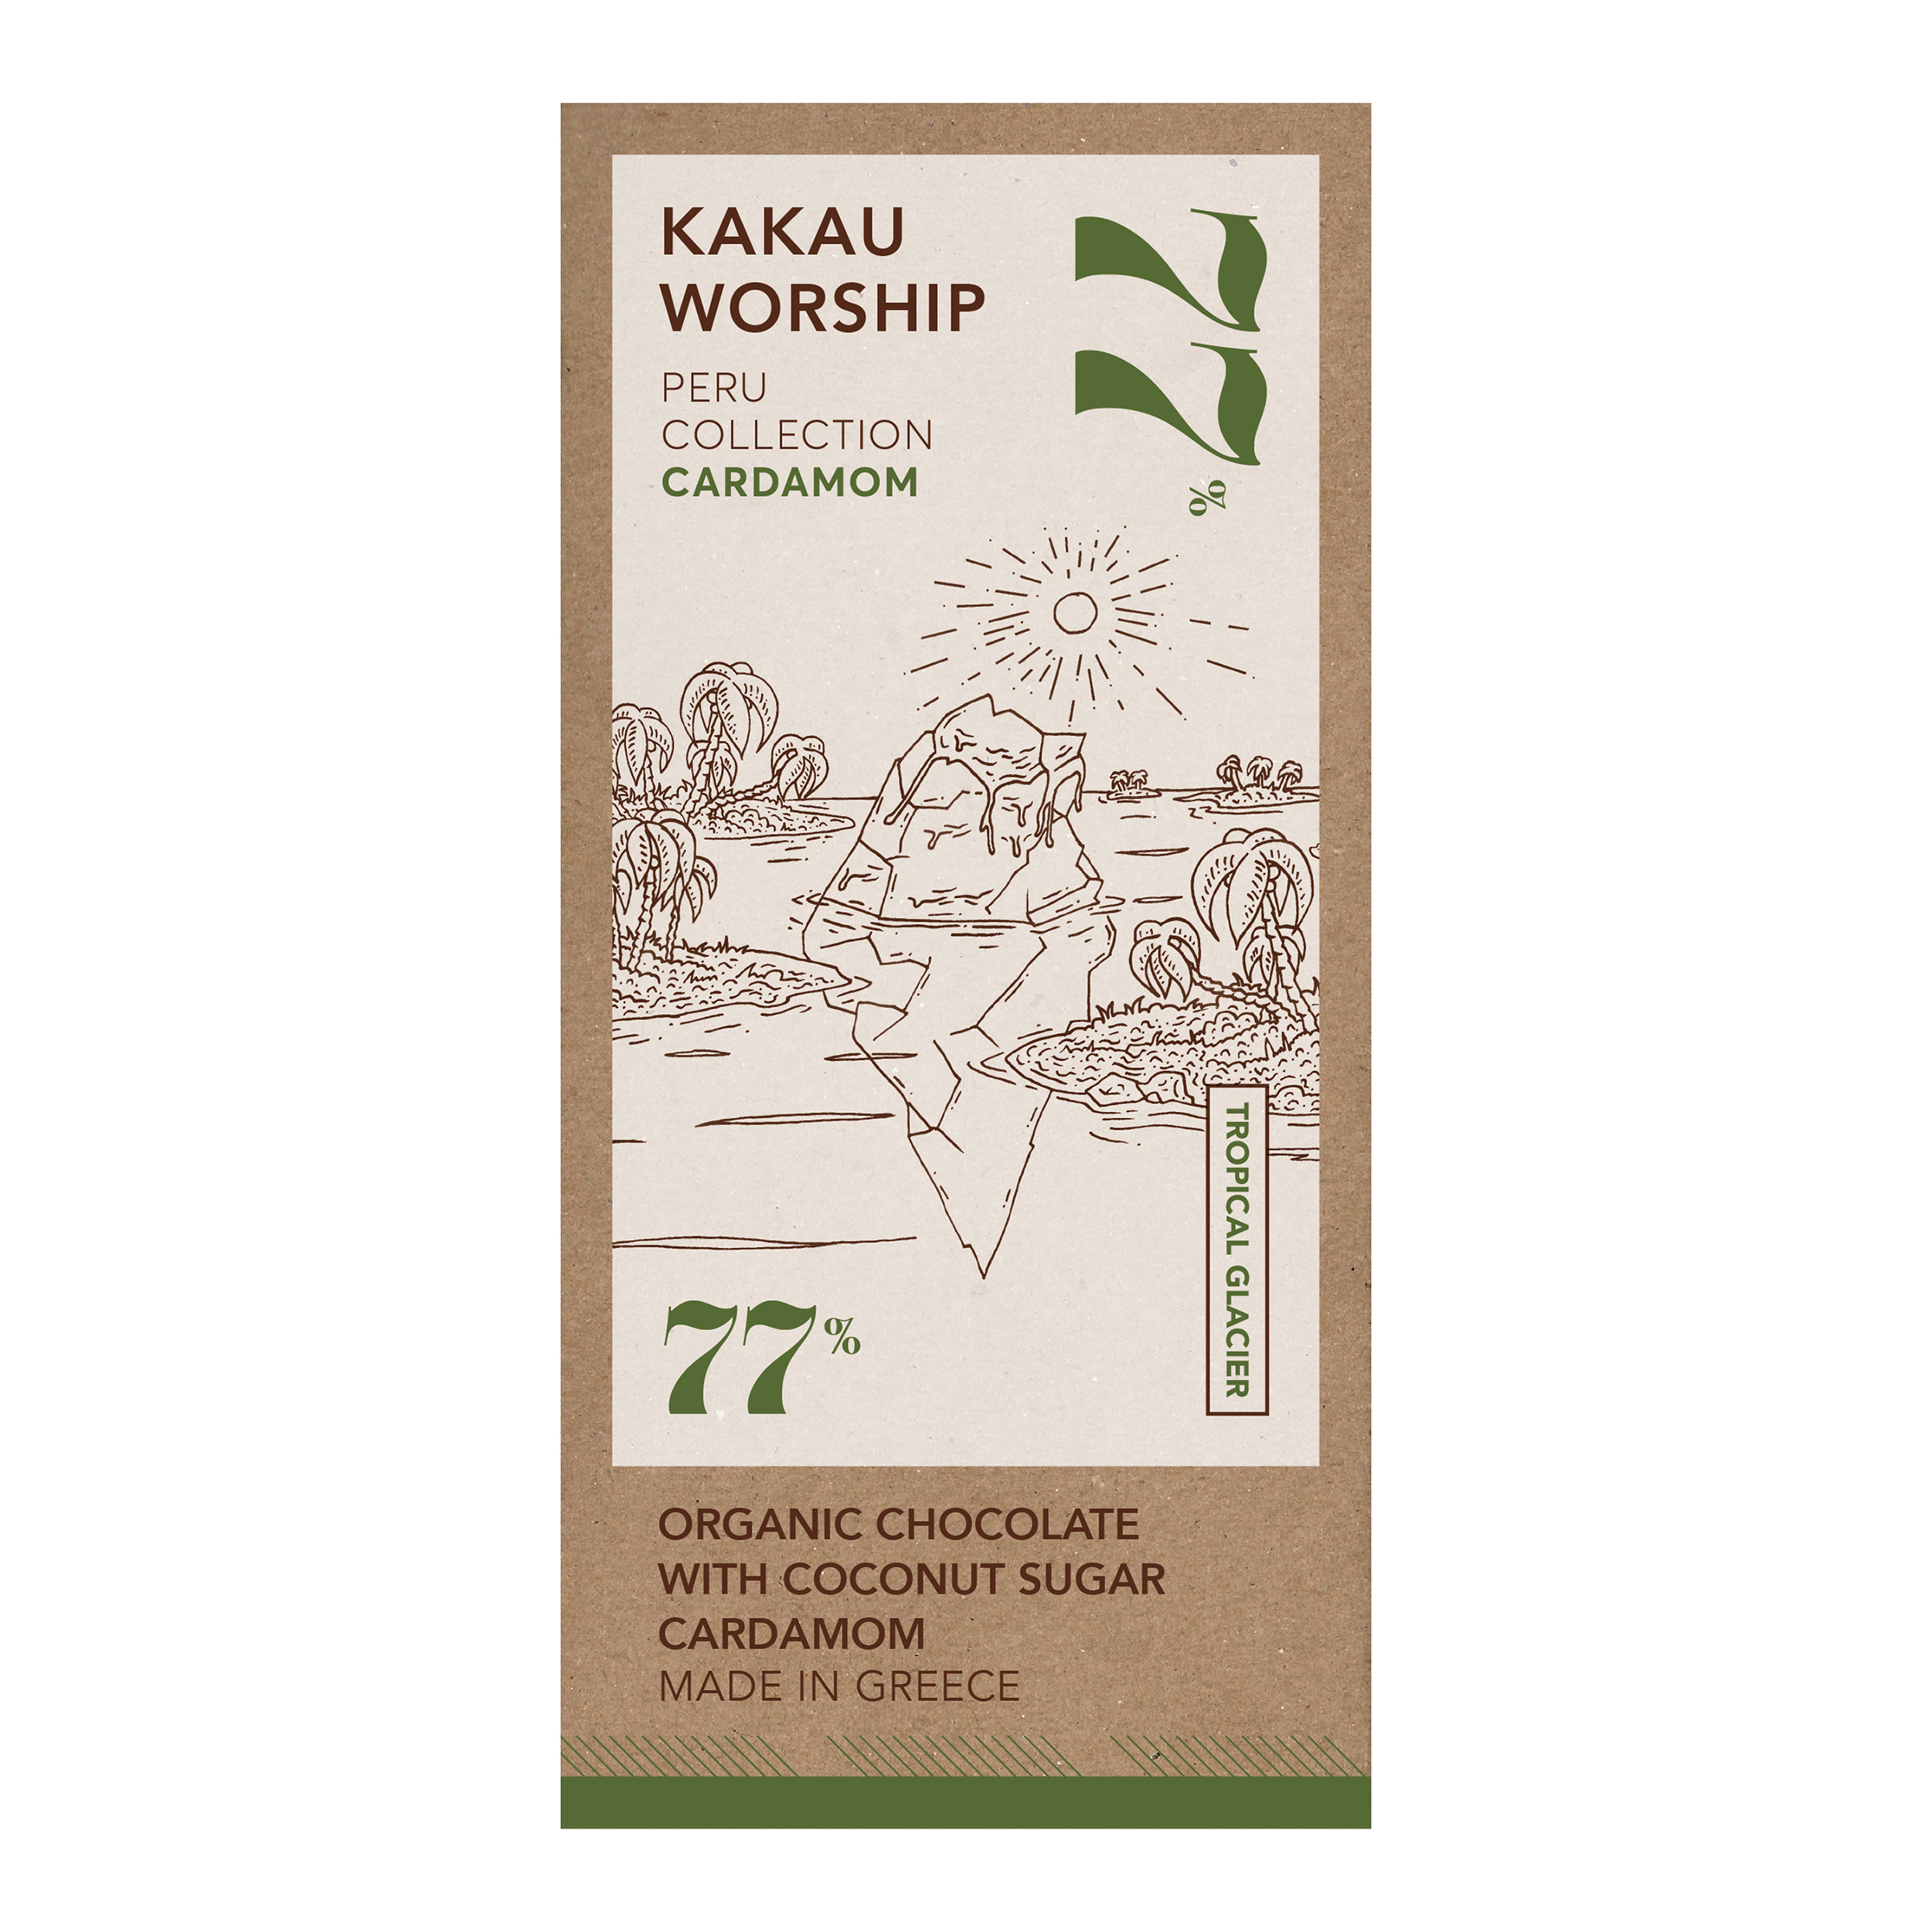 Organic Chocolate Peru Collection 77% with Cardamom Kakau Worship 75gr